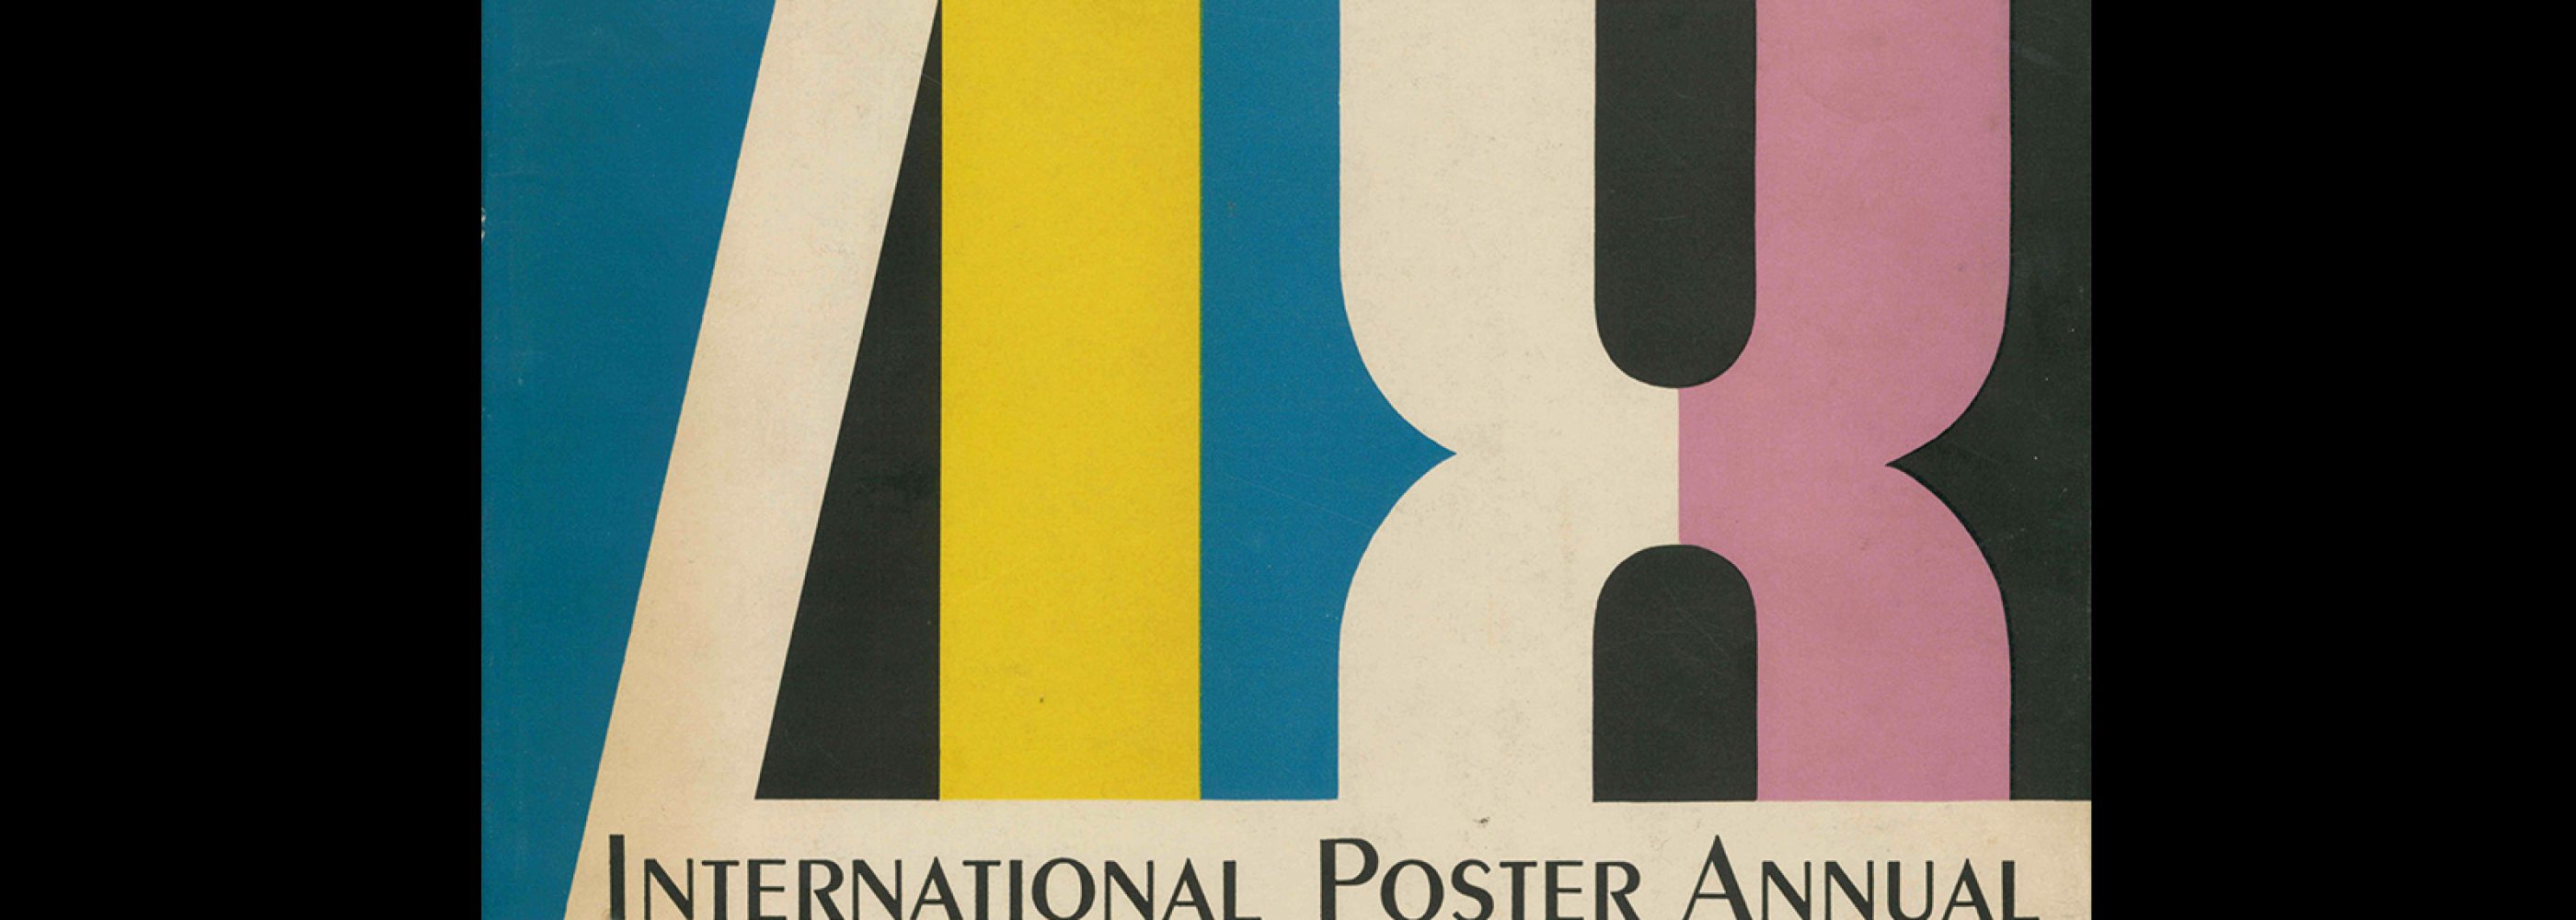 International Poster Annual - 1948 | 1949. Designed by Walter Allner